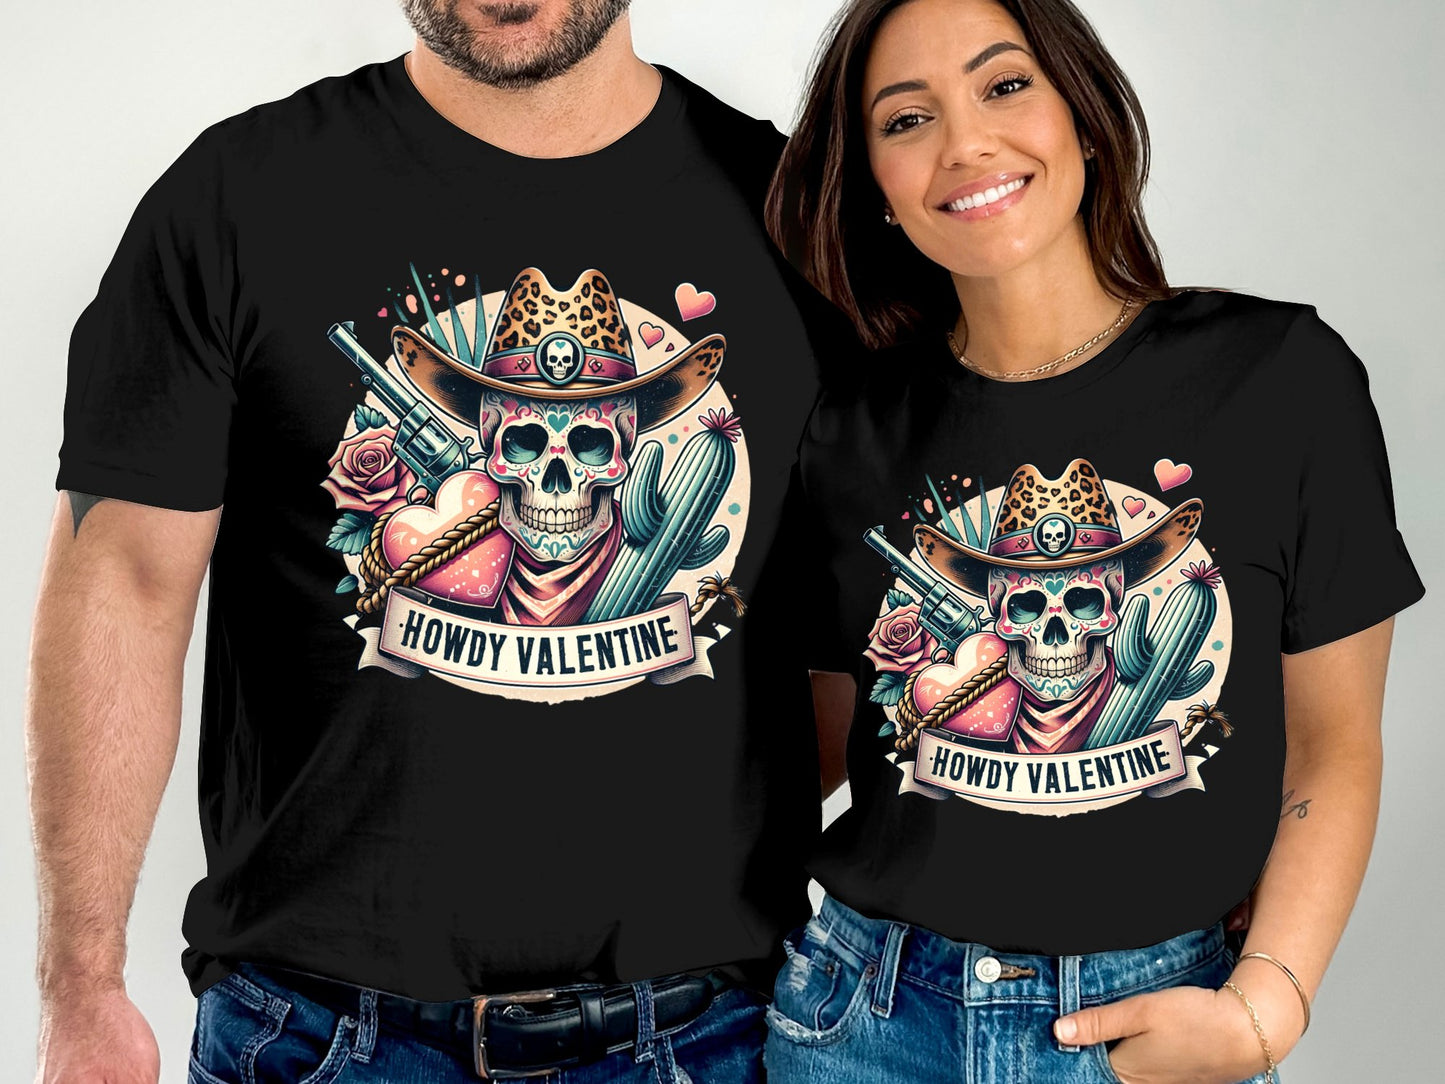 Howdy Valentine (Valentine T-shirt)